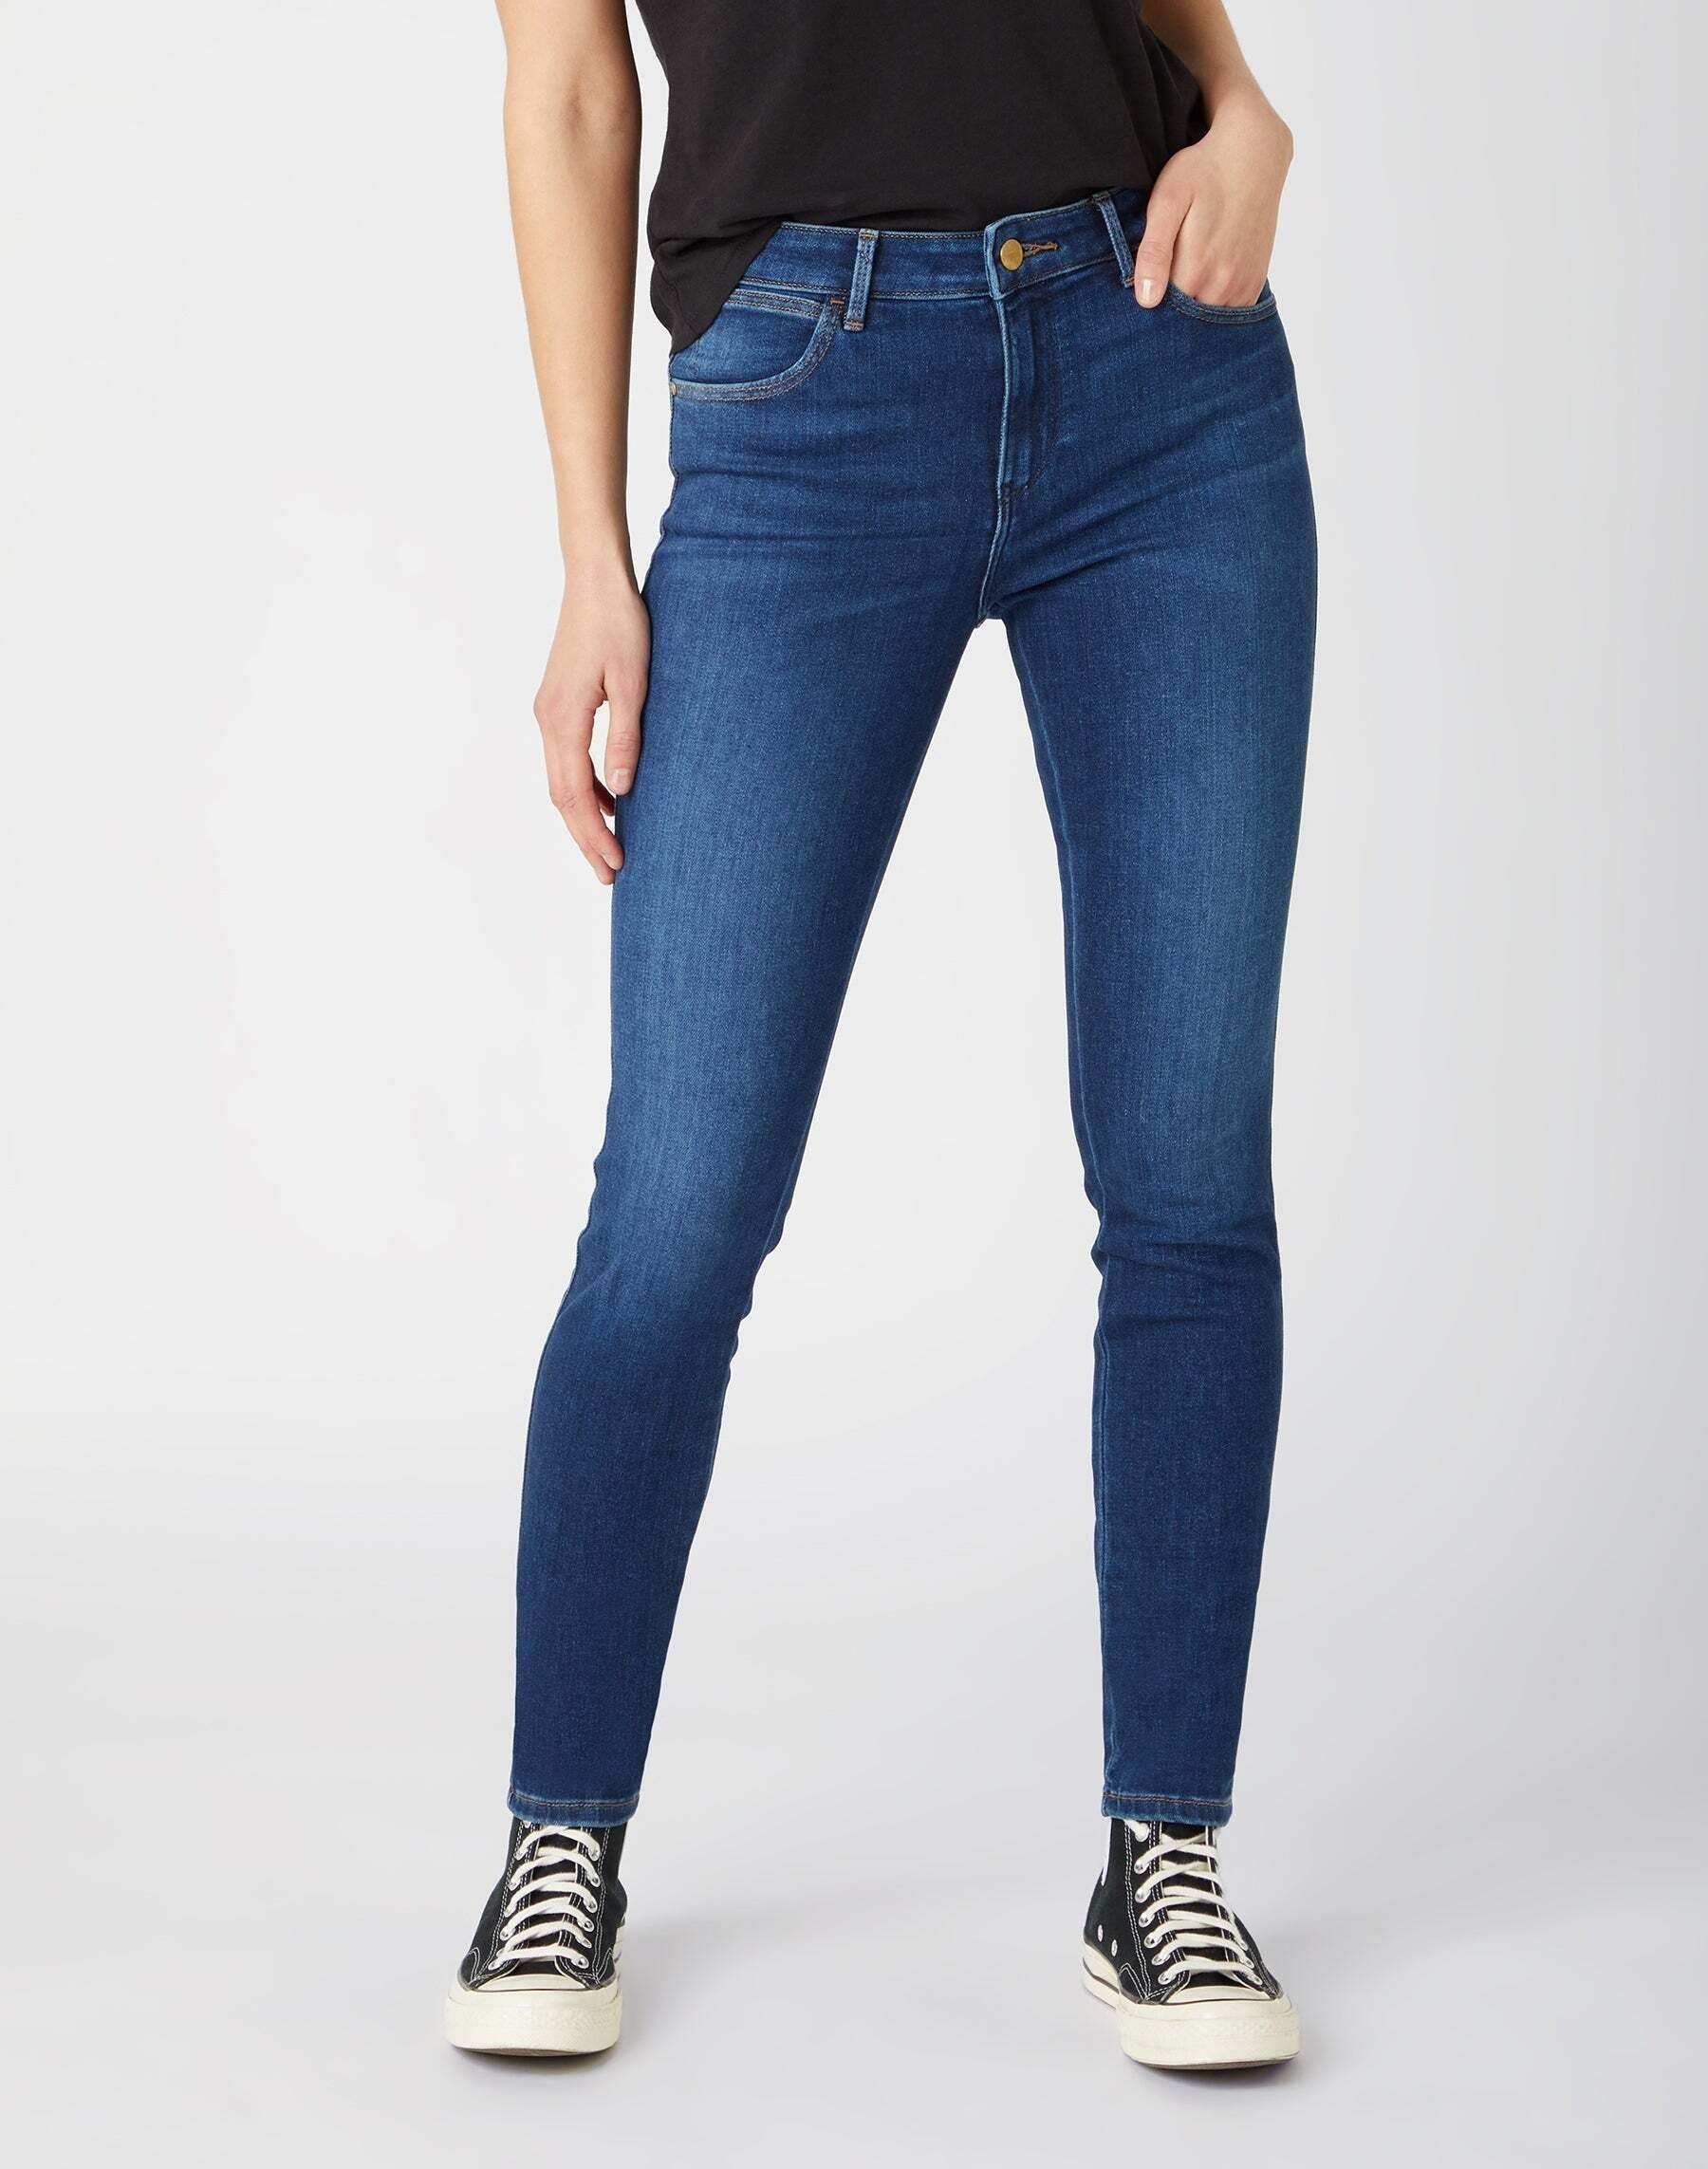 Jeans Skinny Fit Skinny Damen Blau Denim L32/W32 von Wrangler